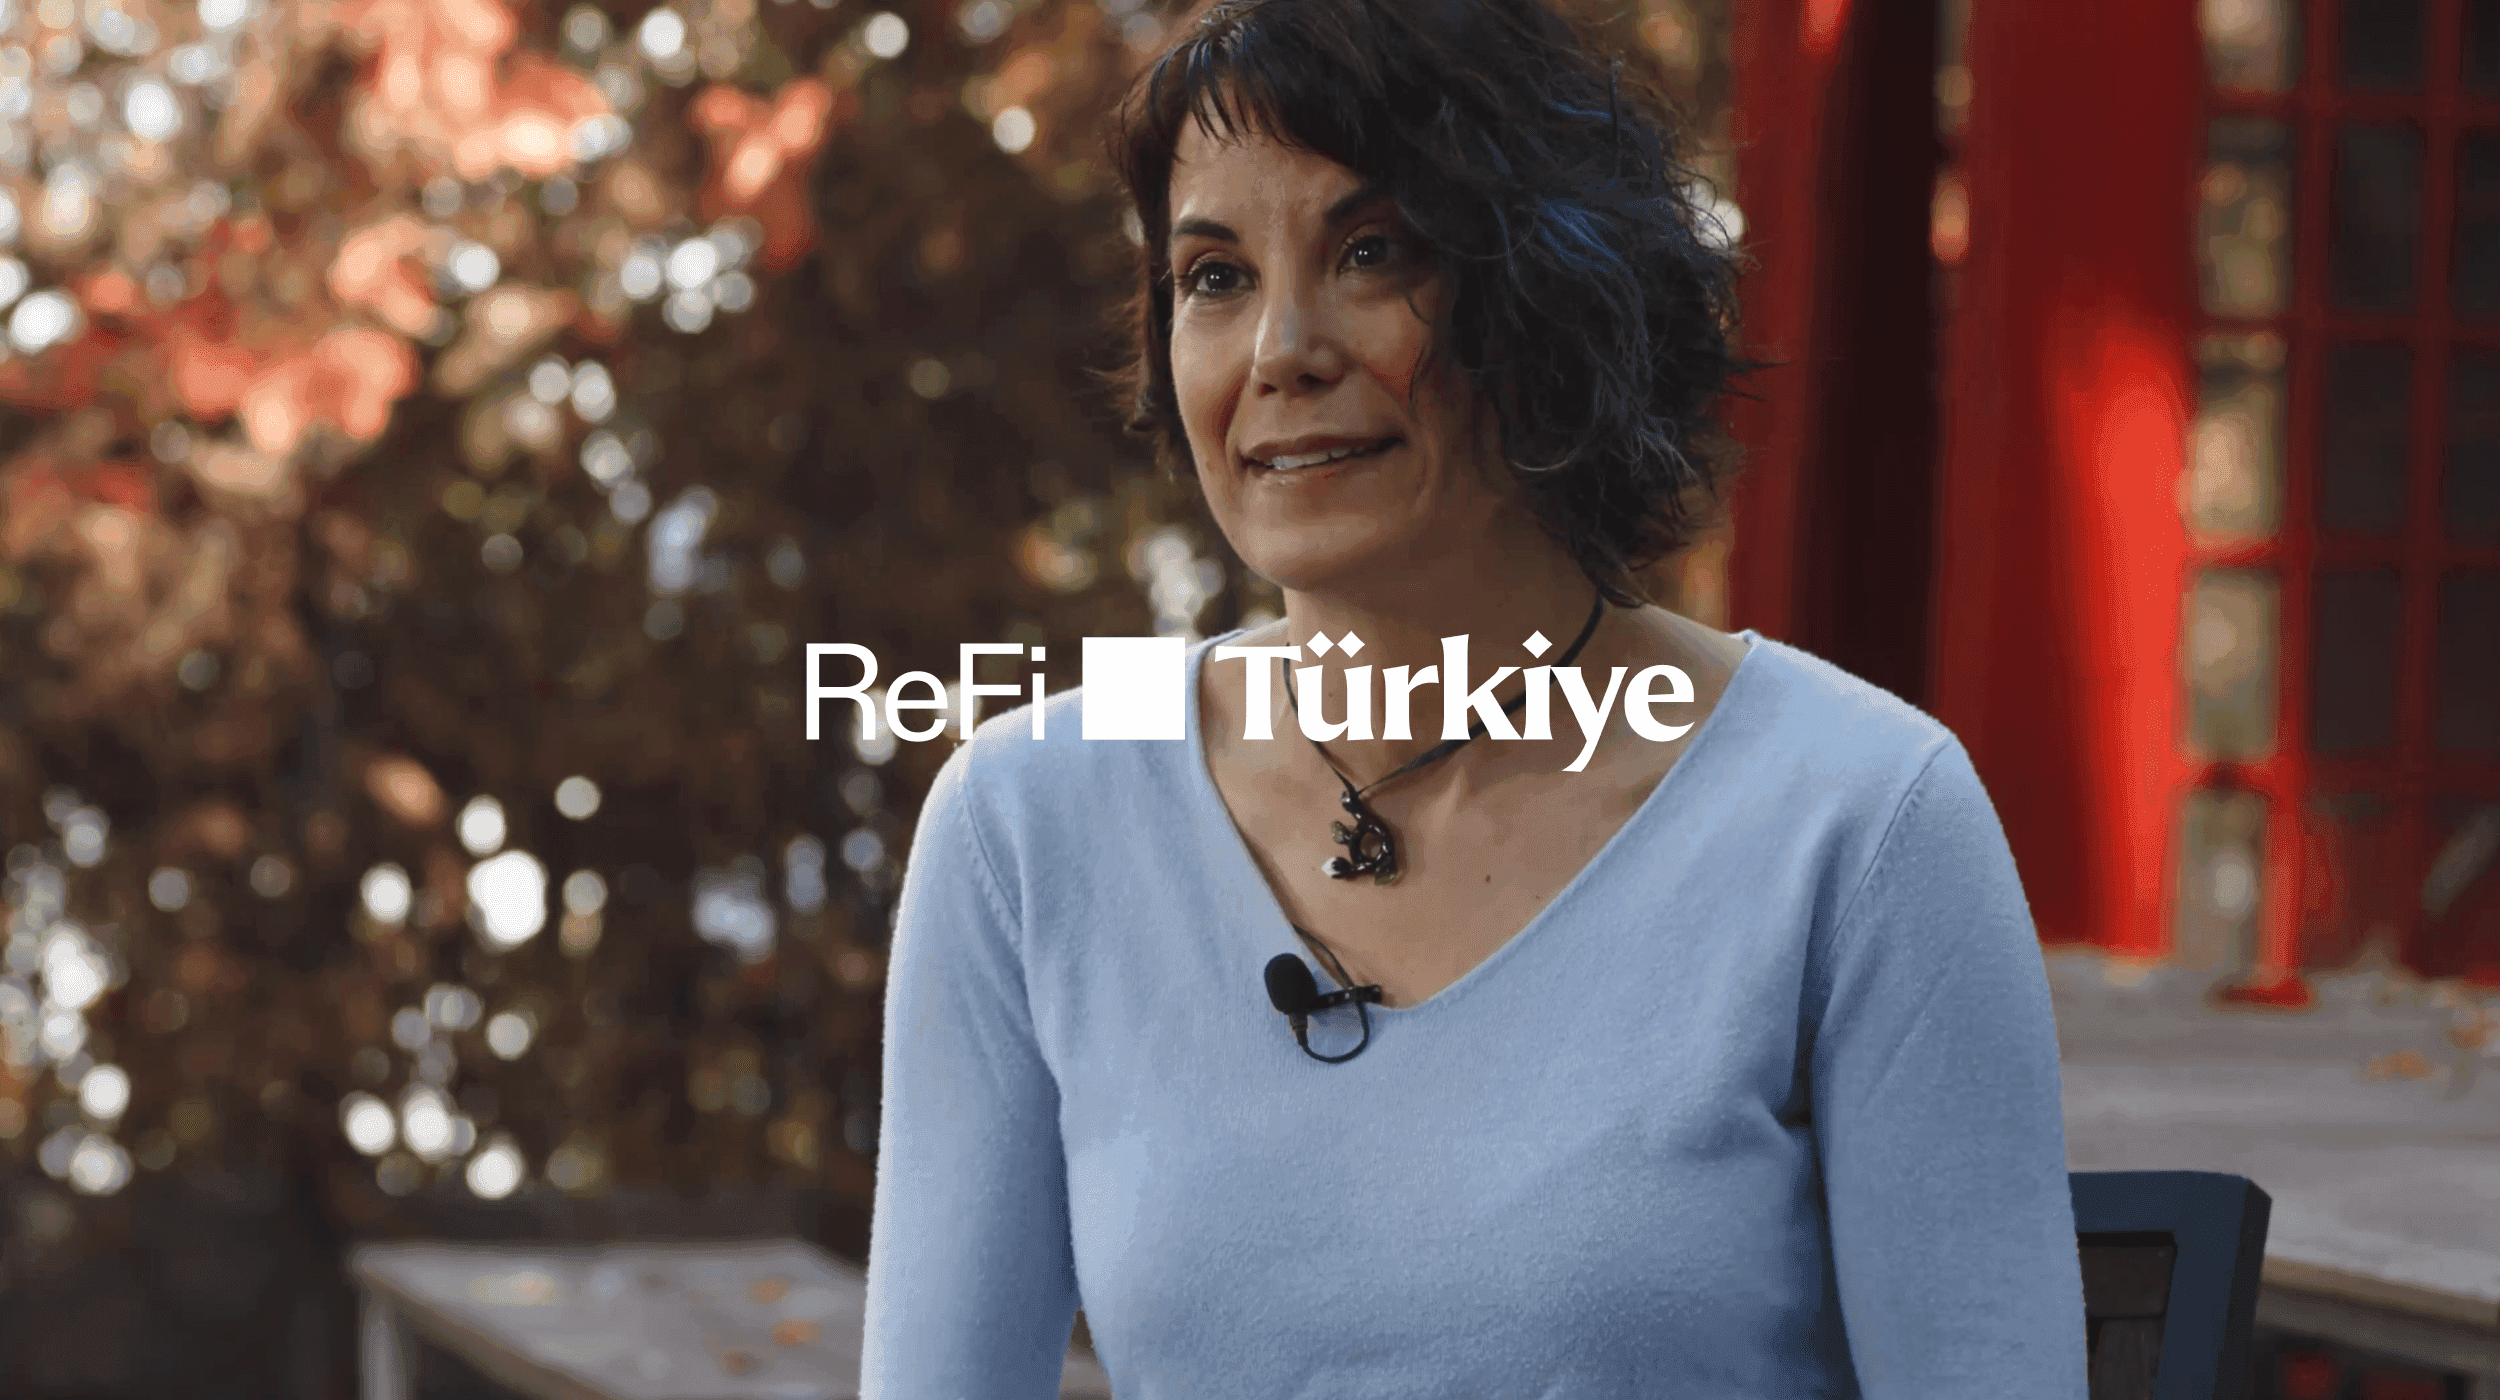 ReFi Turkiye Video Series